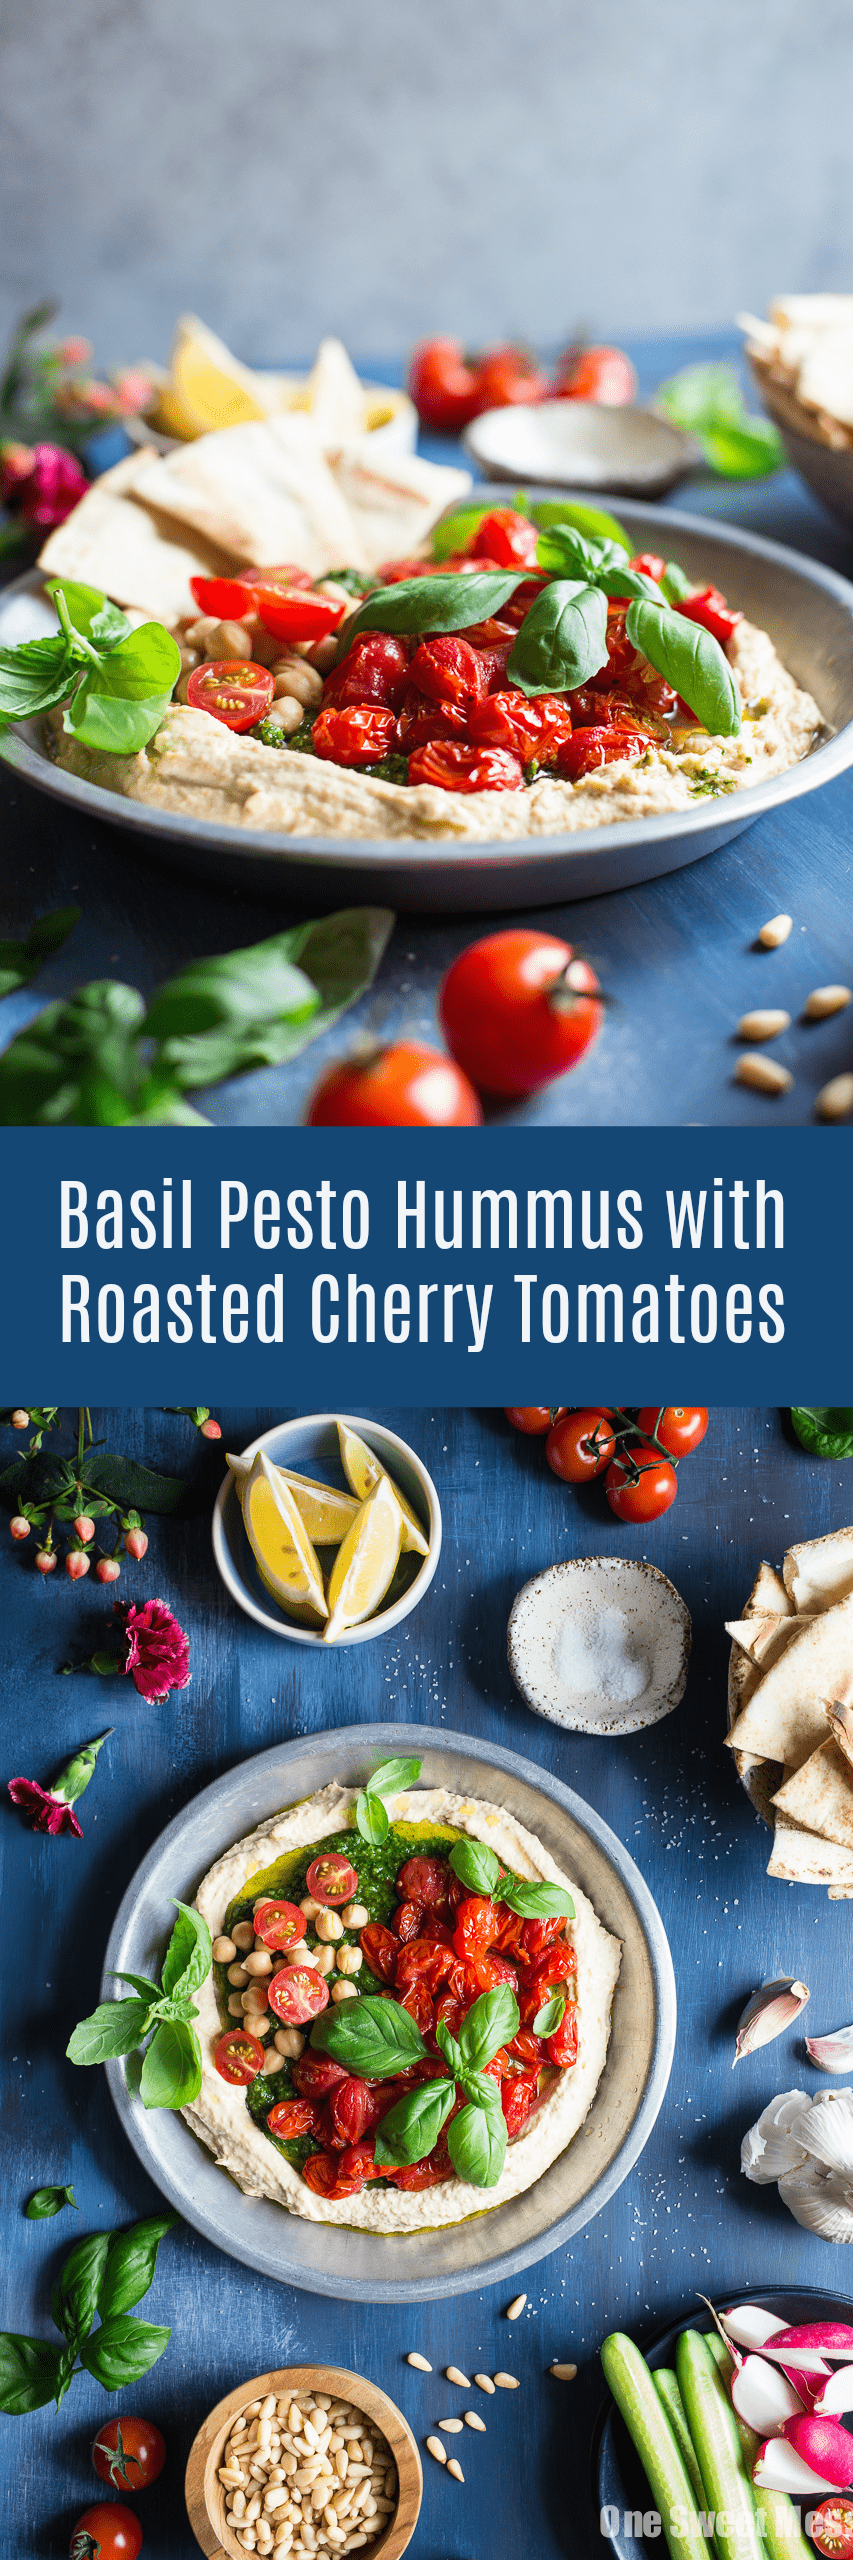 Basil Pesto Hummus with Roasted Cherry Tomatoes